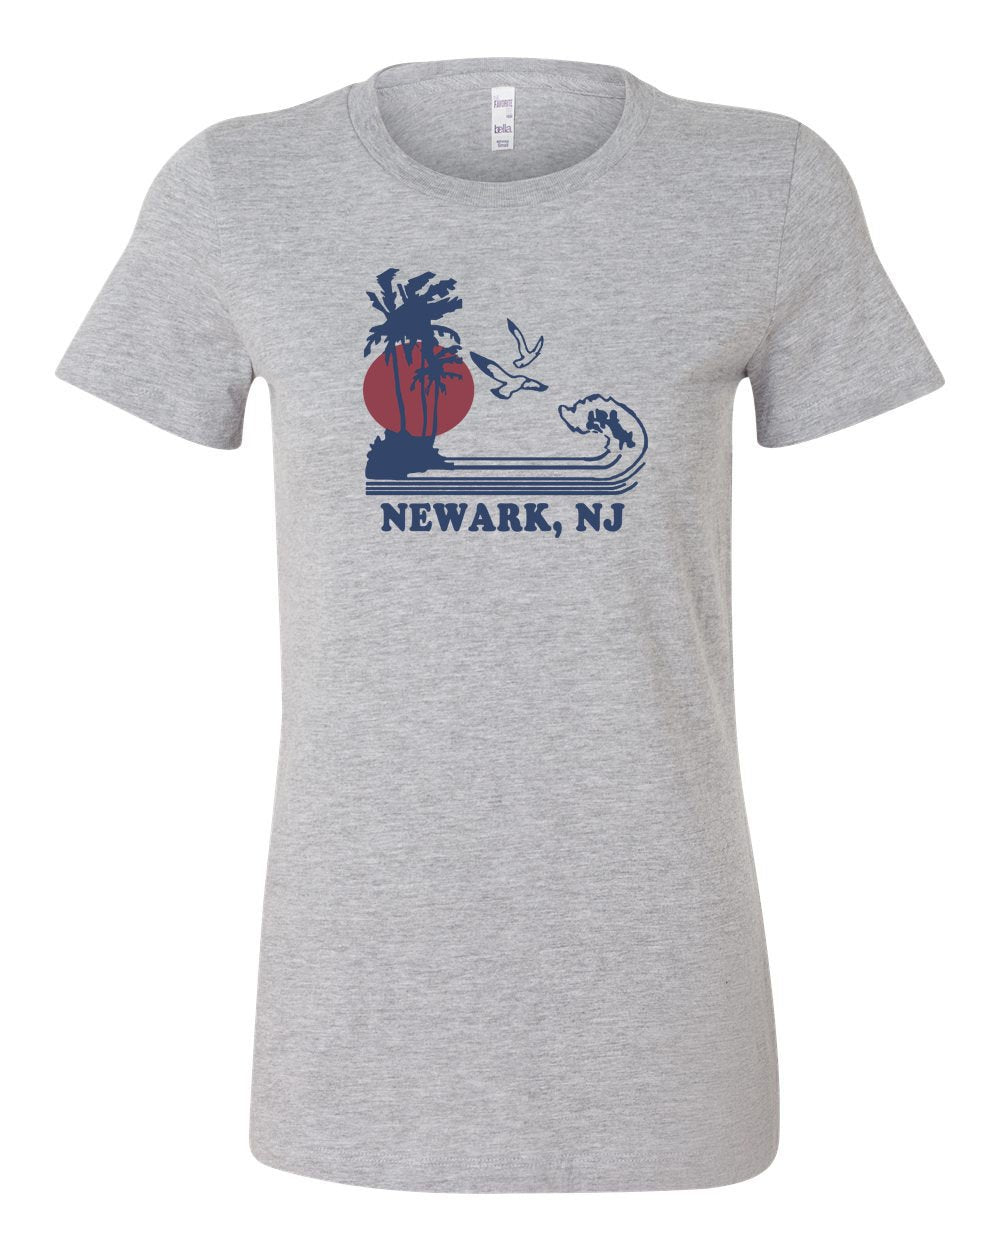 Newark LADIES Junior-Fit T-Shirt